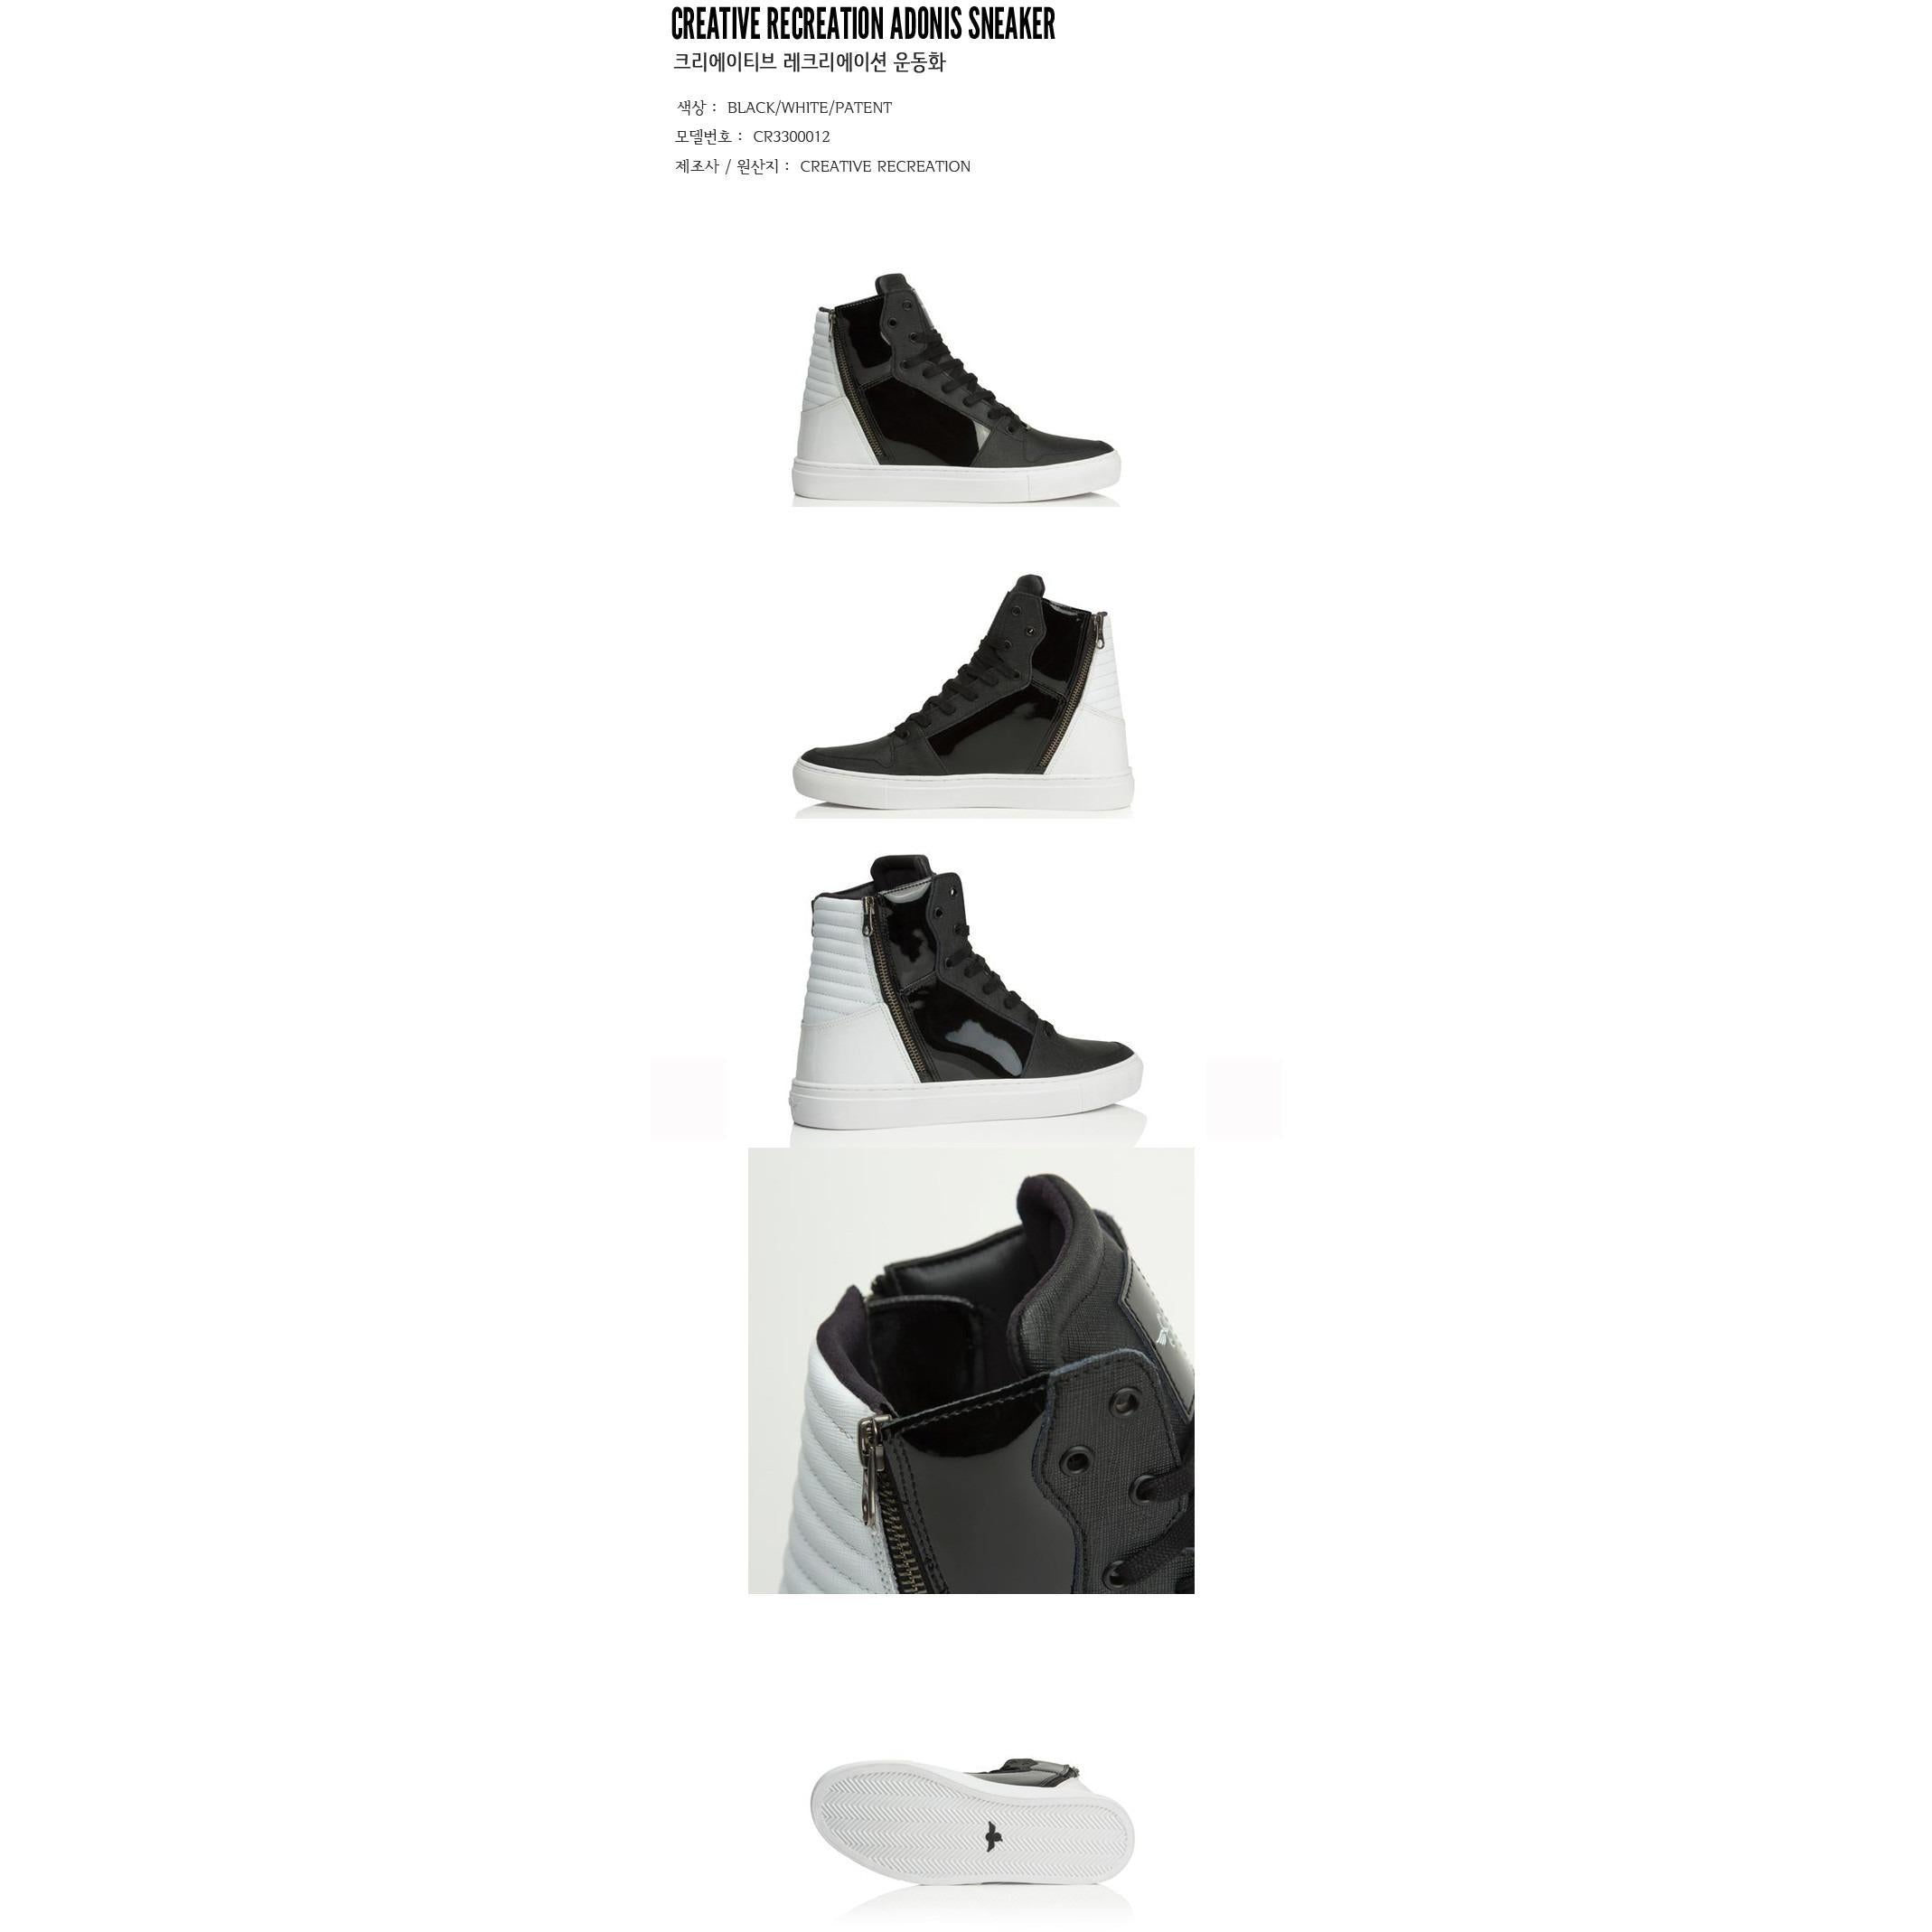 CREATIVE RECREATION Adonis Sneaker BLACKWHITEPATENT CR3300012.